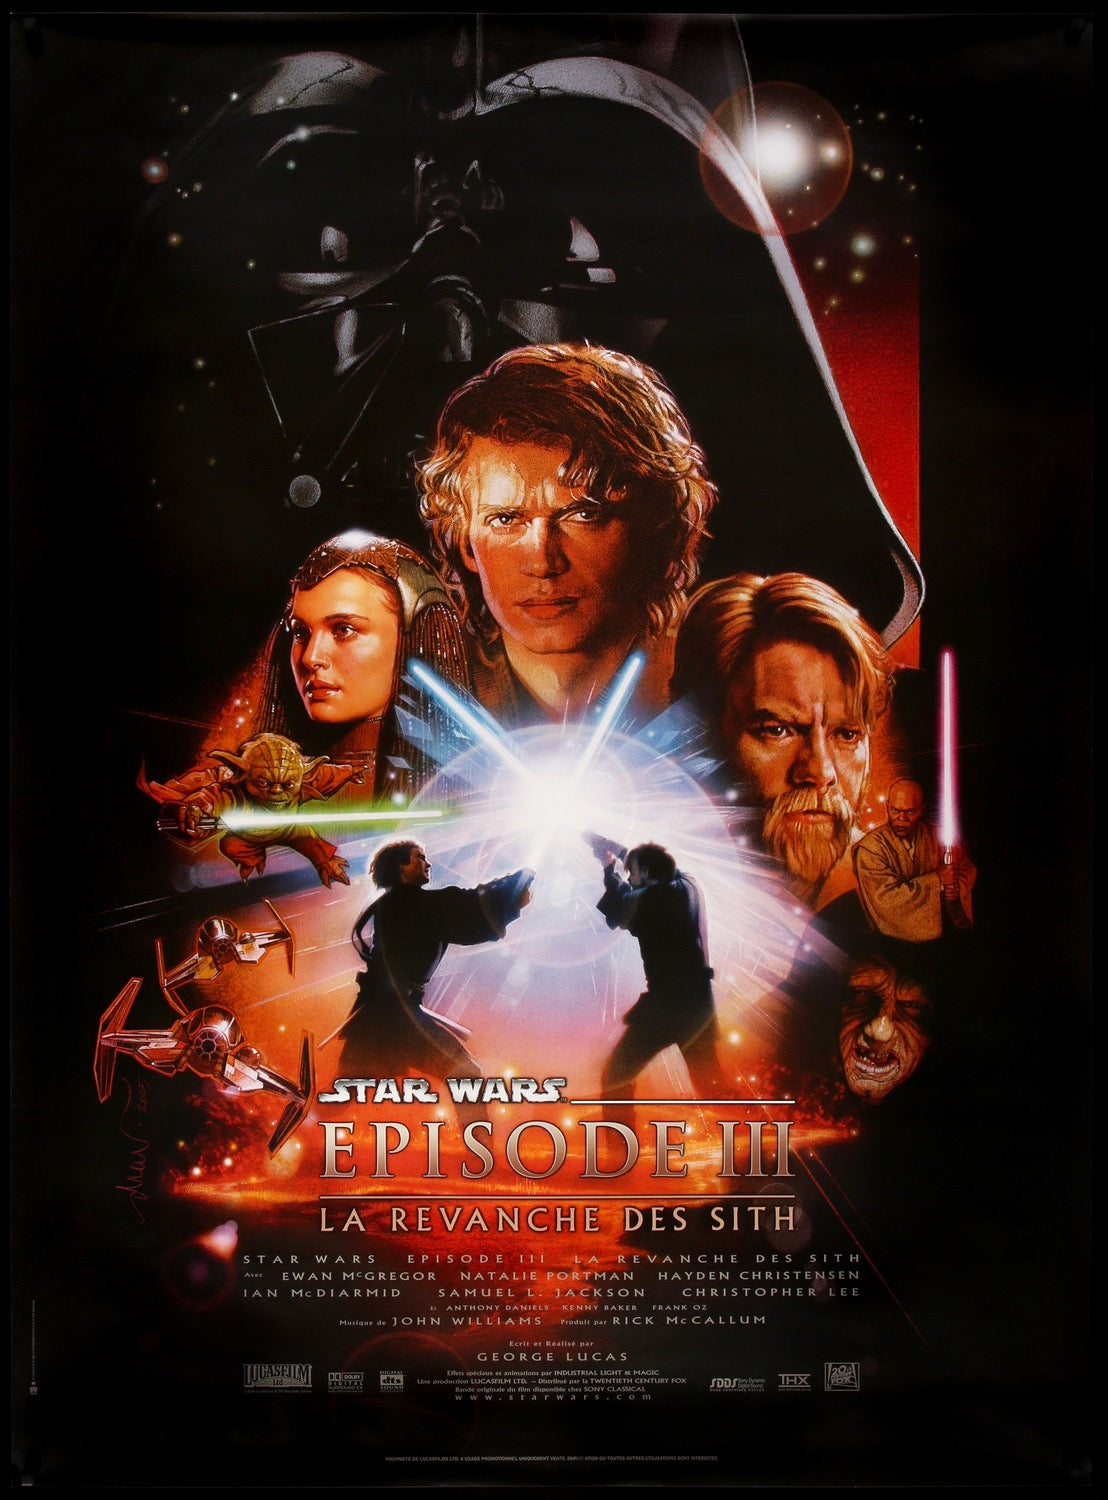 Star Wars: Episode III - Revenge of the Sith (2005) original movie poster for sale at Original Film Art